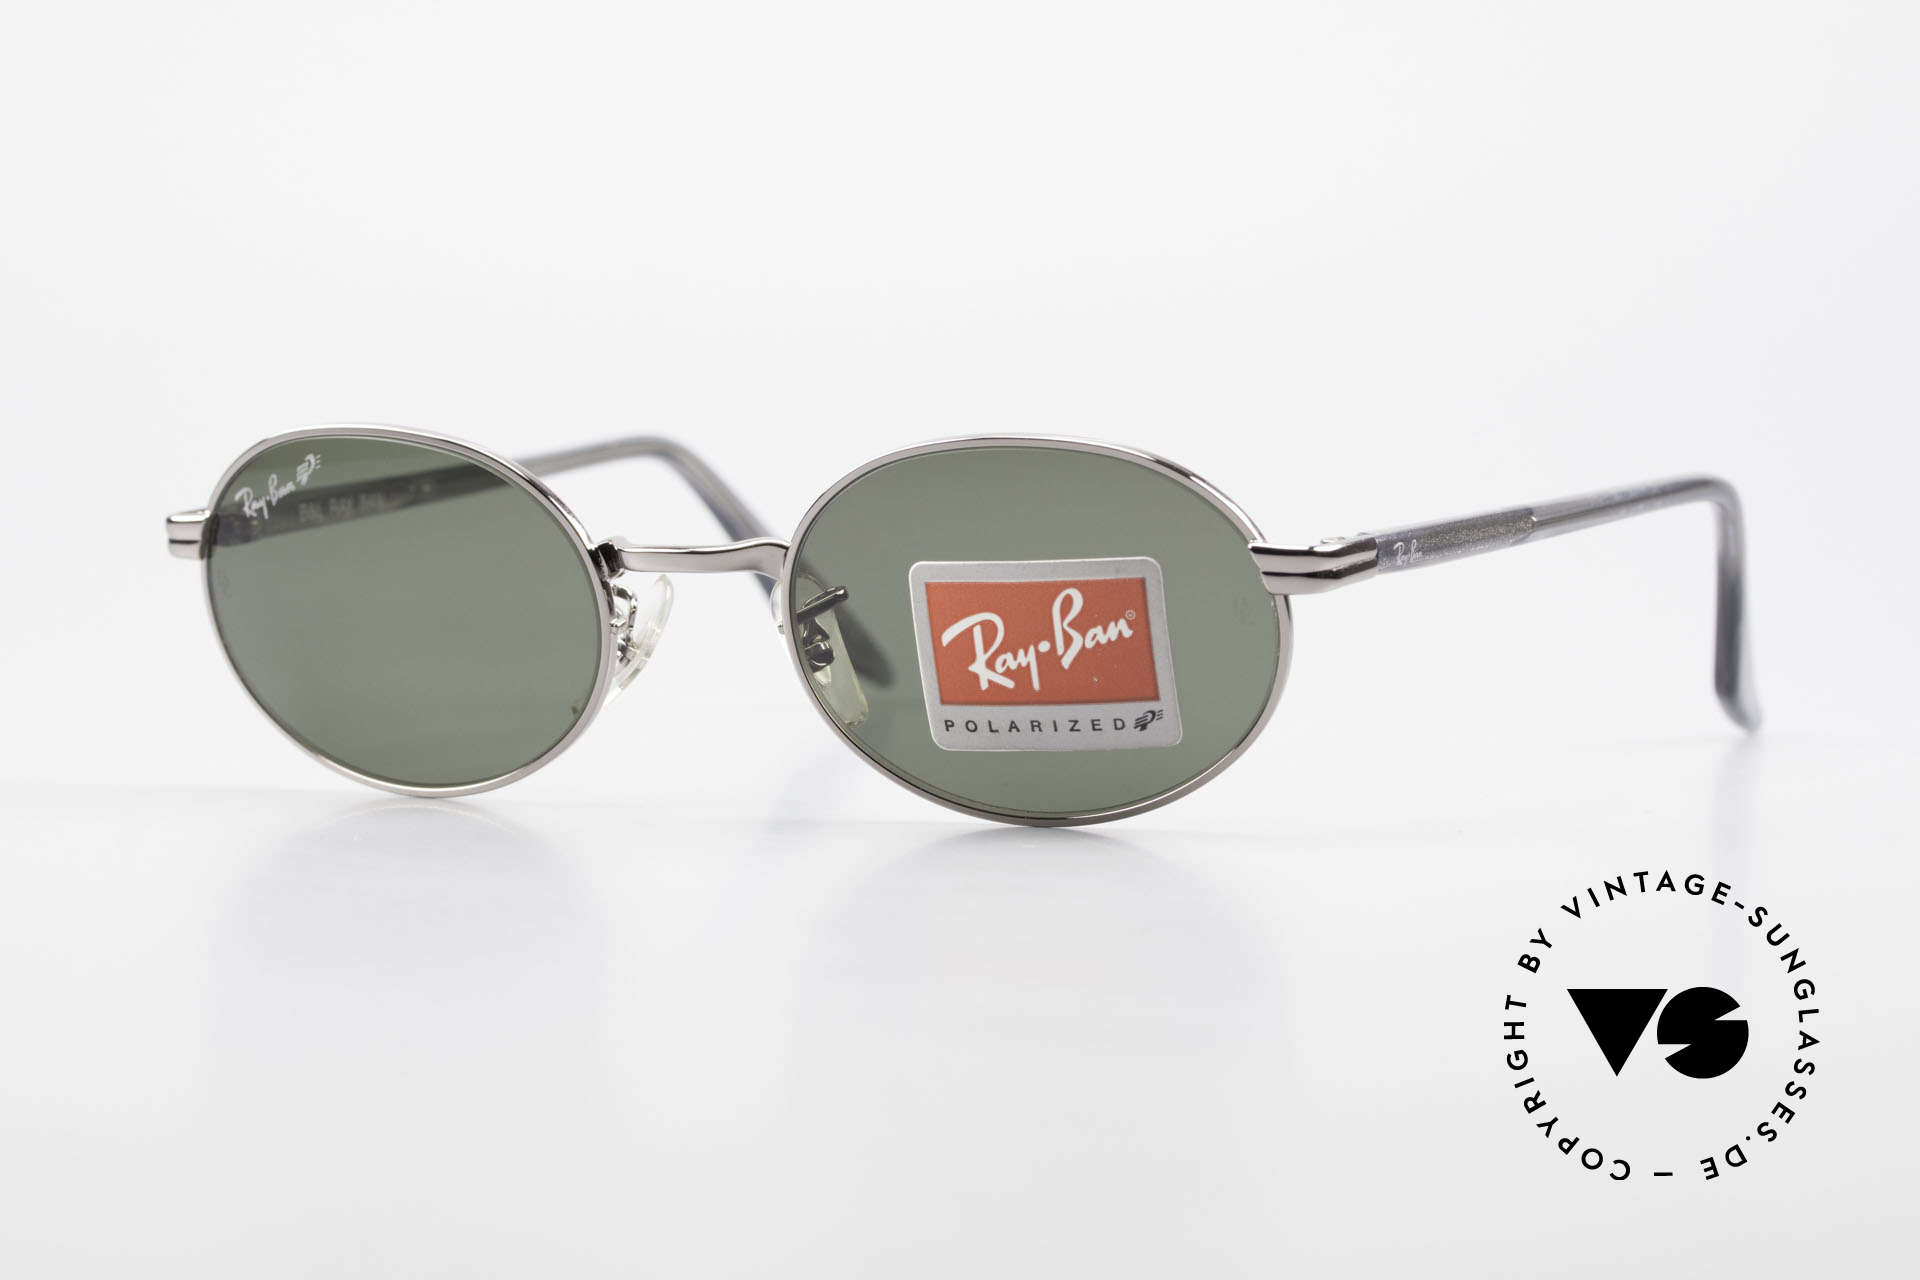 Sunglasses Ray Ban Sidestreet Diner Oval Polarized Usa B L Sunglasses